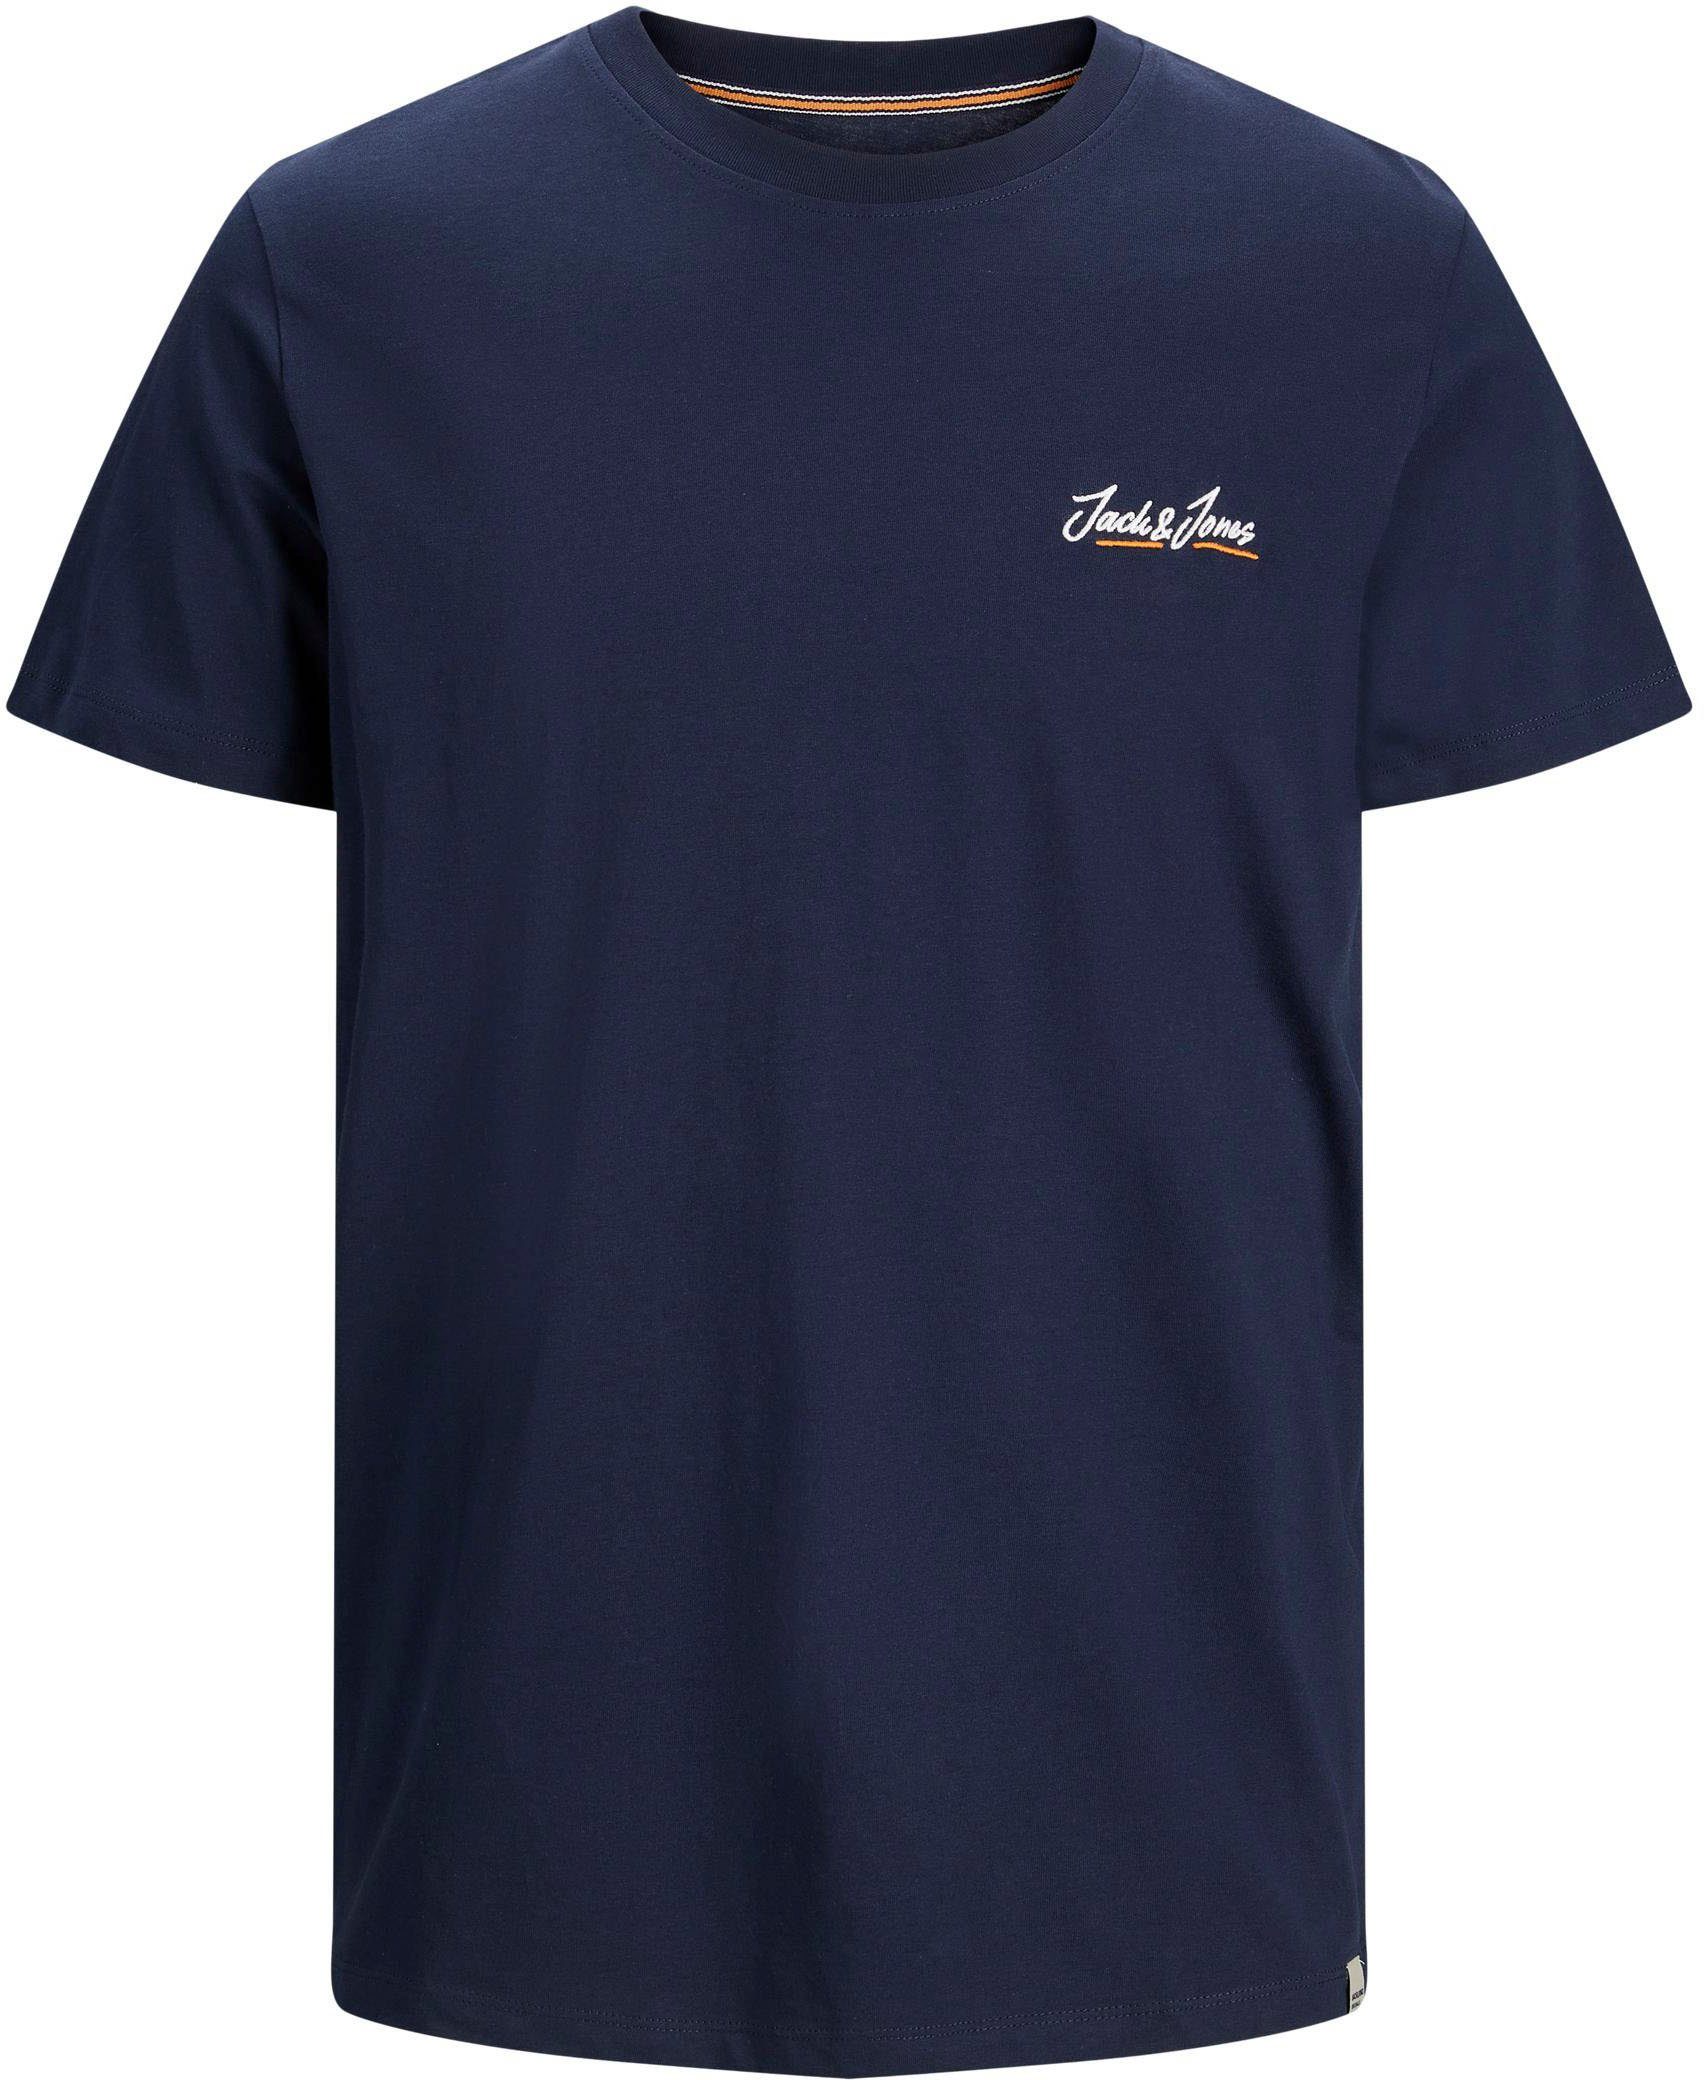 blau TONS Jack Jones T-Shirt & TEE